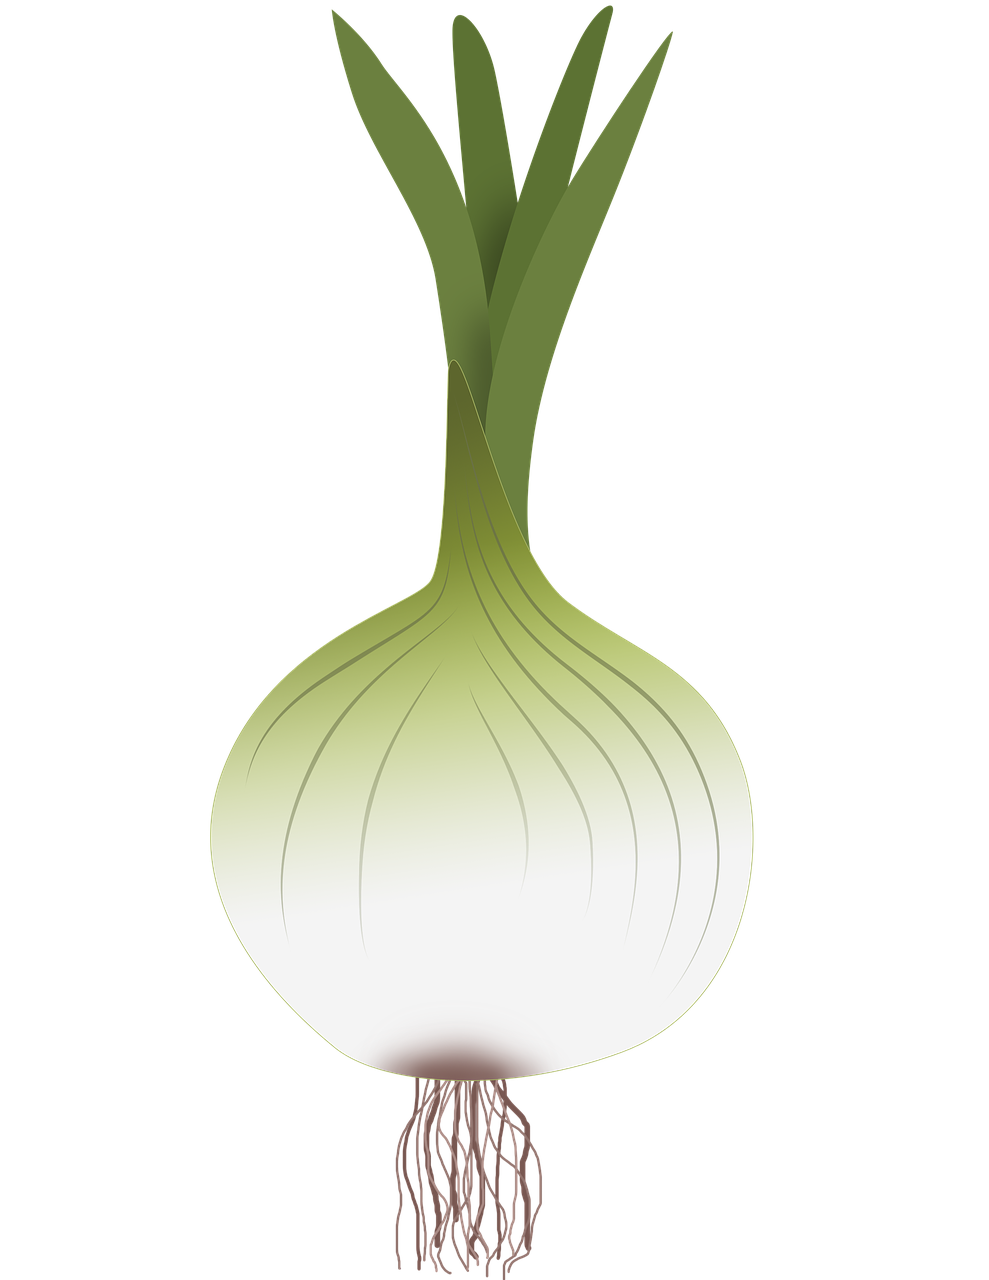 Green Onion No Background